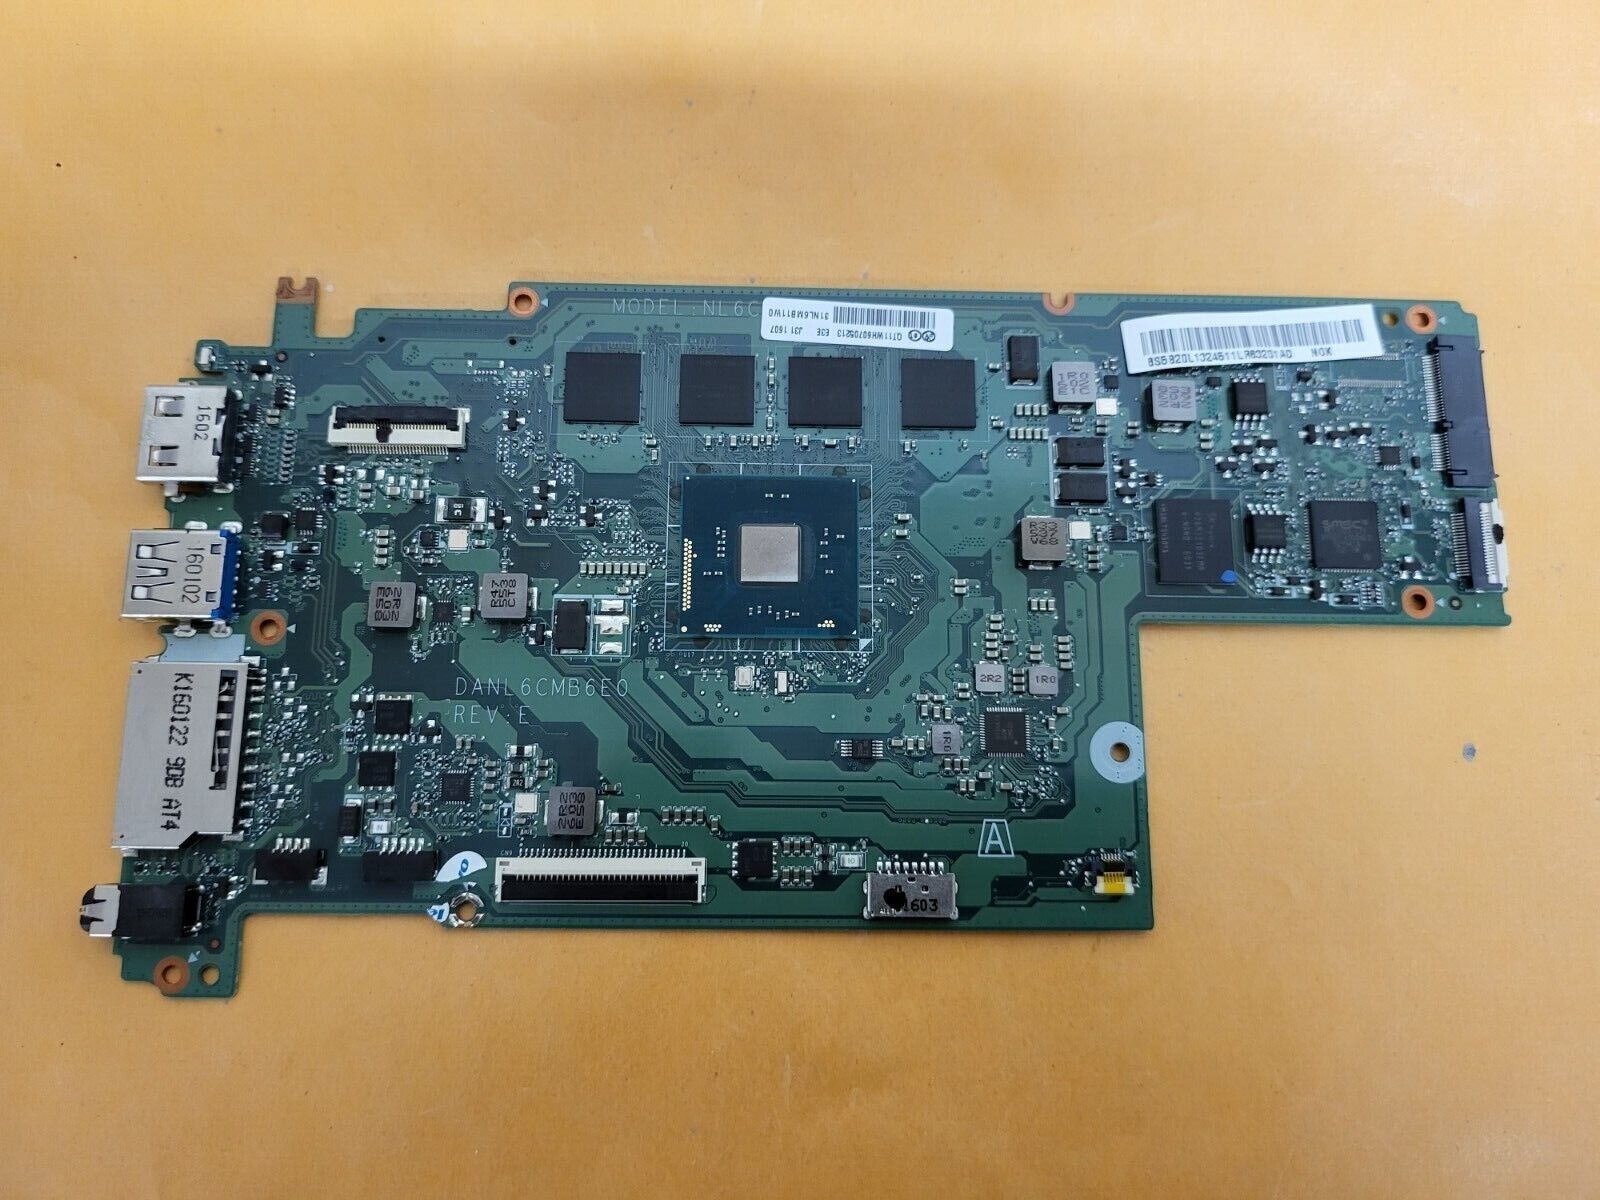 Genuine Lenovo N22-20 Chromebook Motherboard 4GB CPU SR29H DANL6CMB6E0 